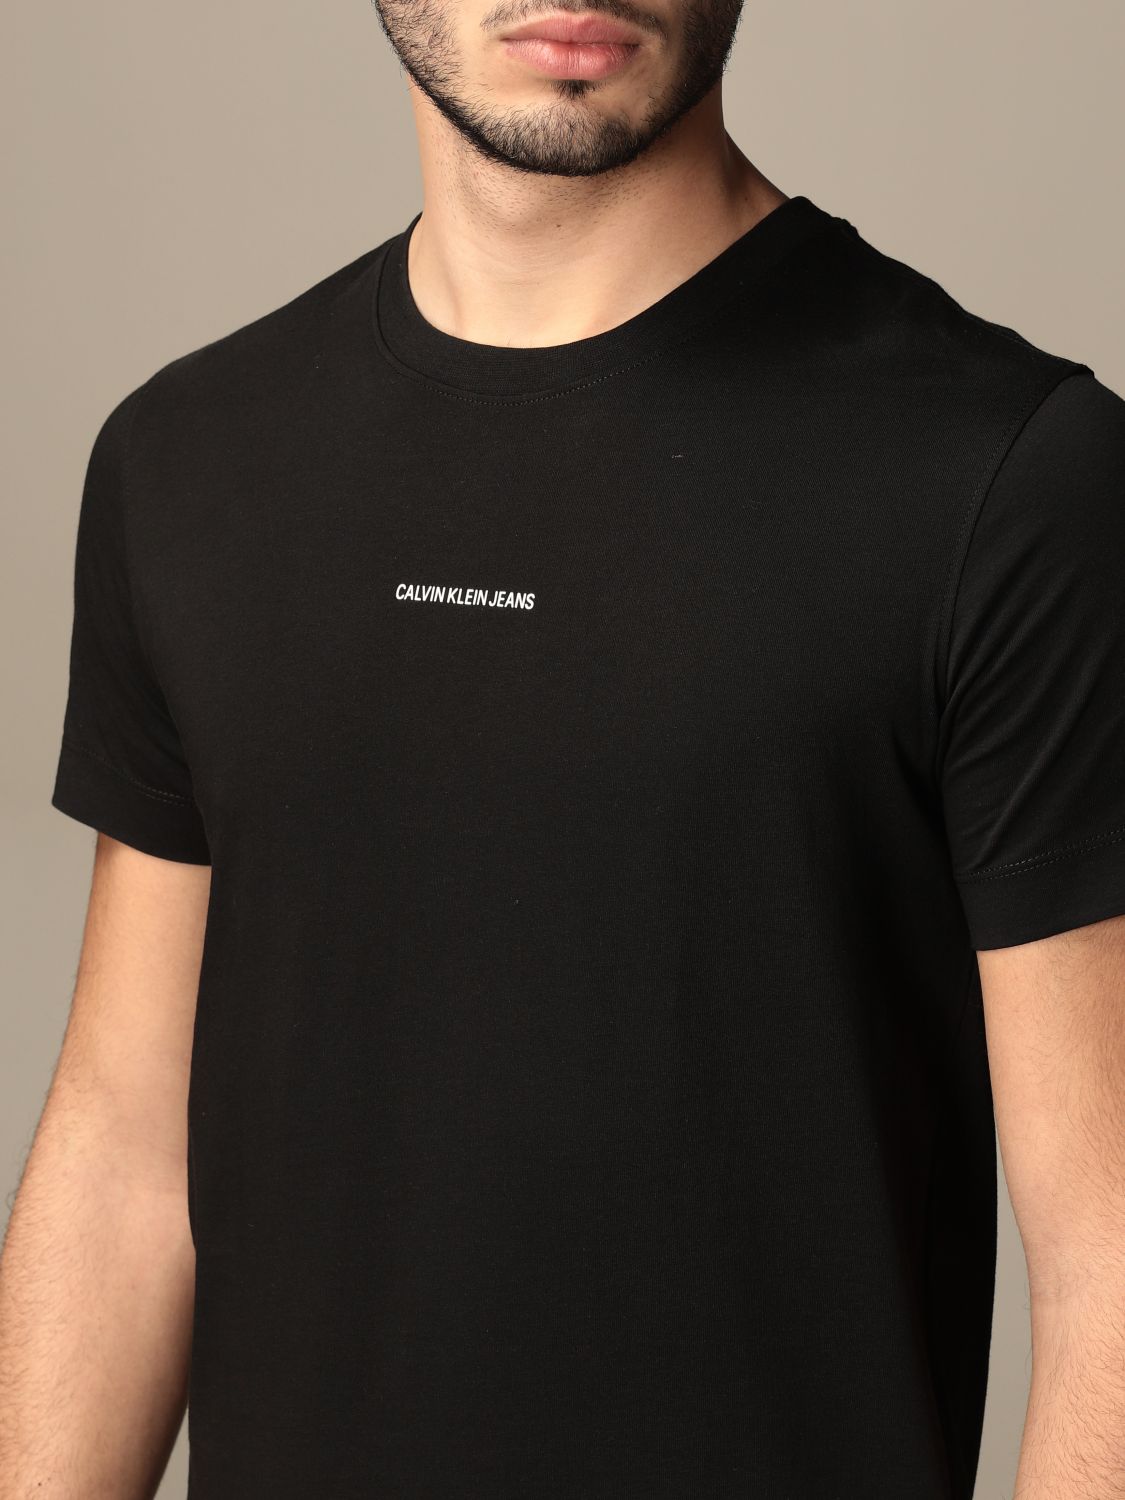 CALVIN KLEIN JEANS: T-shirt with logo - Black | Calvin Klein Jeans t ...